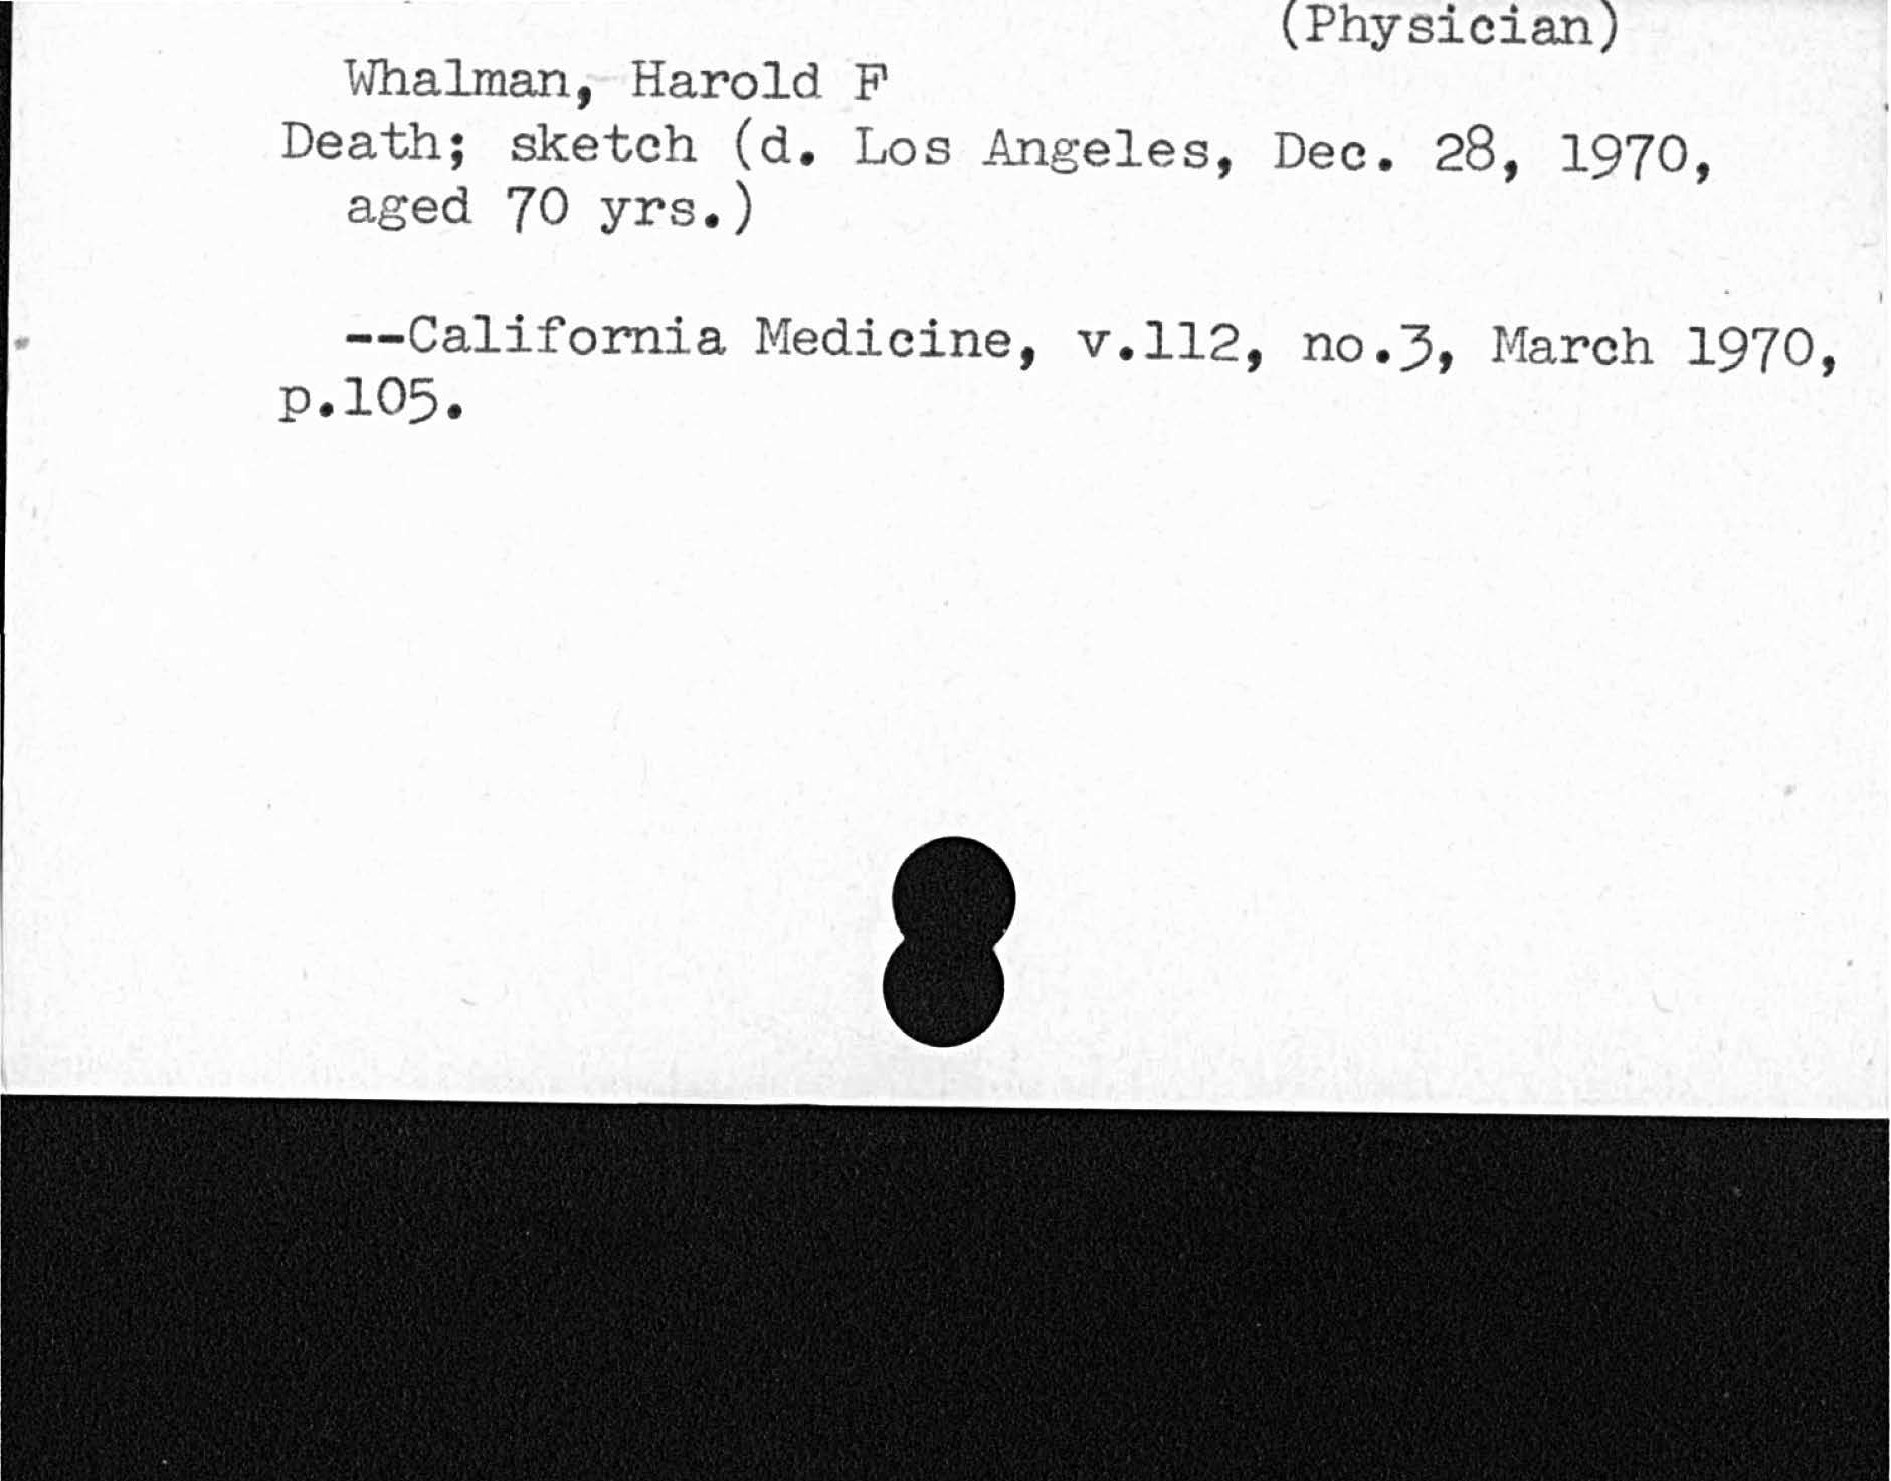 PhysicianWhalman, Harold FDeath; sketch d. Los Angeles, Dec. 28, 1970,aged 70 yrs.California Medicine, v. ll2, no. 3, March 1970,p. l05.